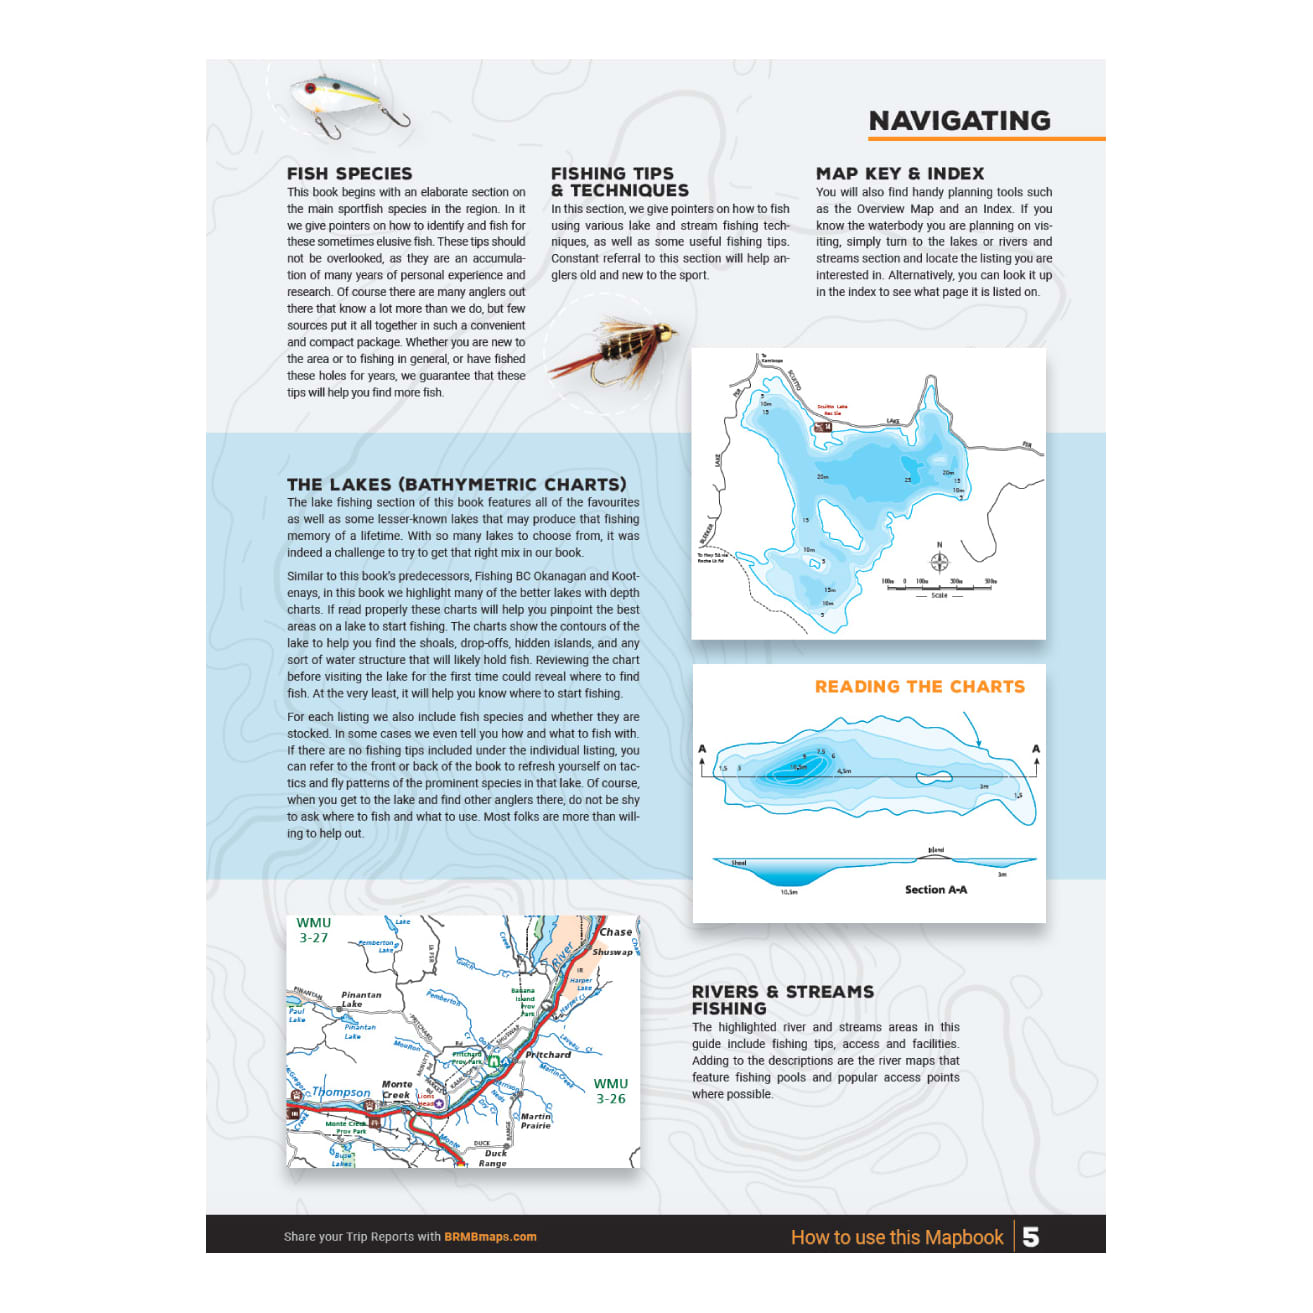 Backroad Mapbook - Thompson Okanagan BC Fishing Mapbook